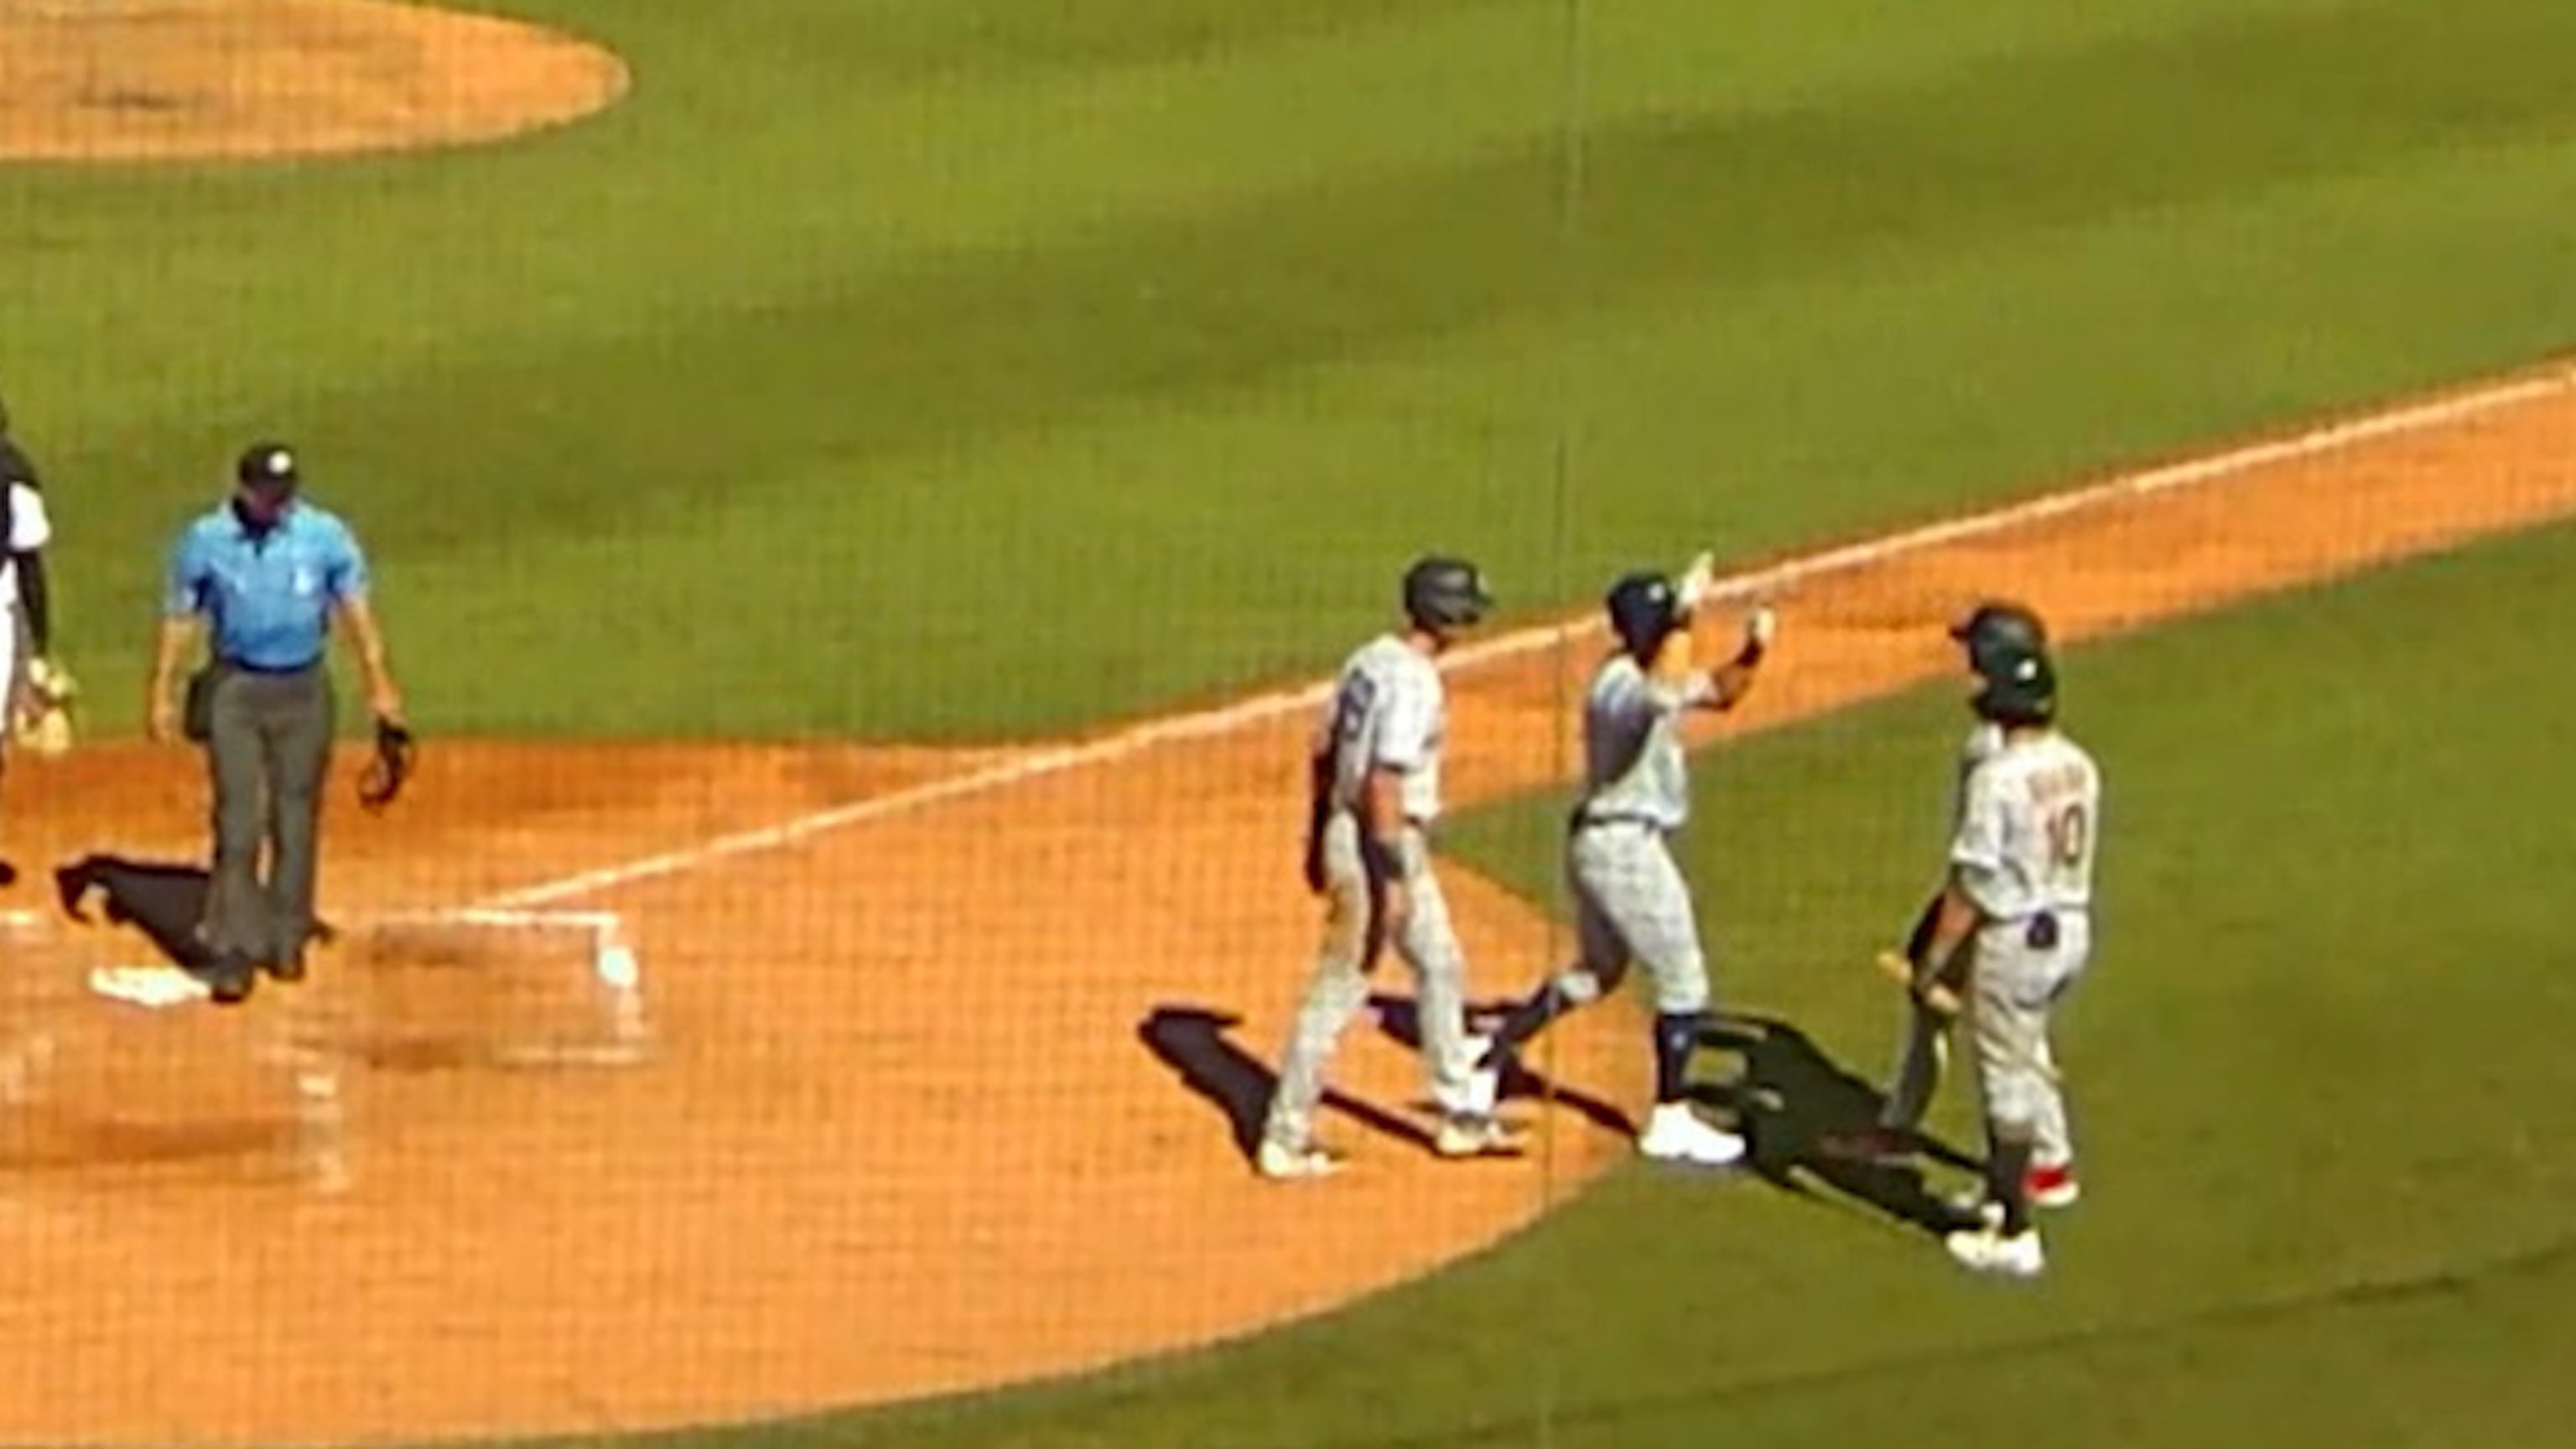 Tampa Bay Rays at Tropicana Field — American Baseball Journal